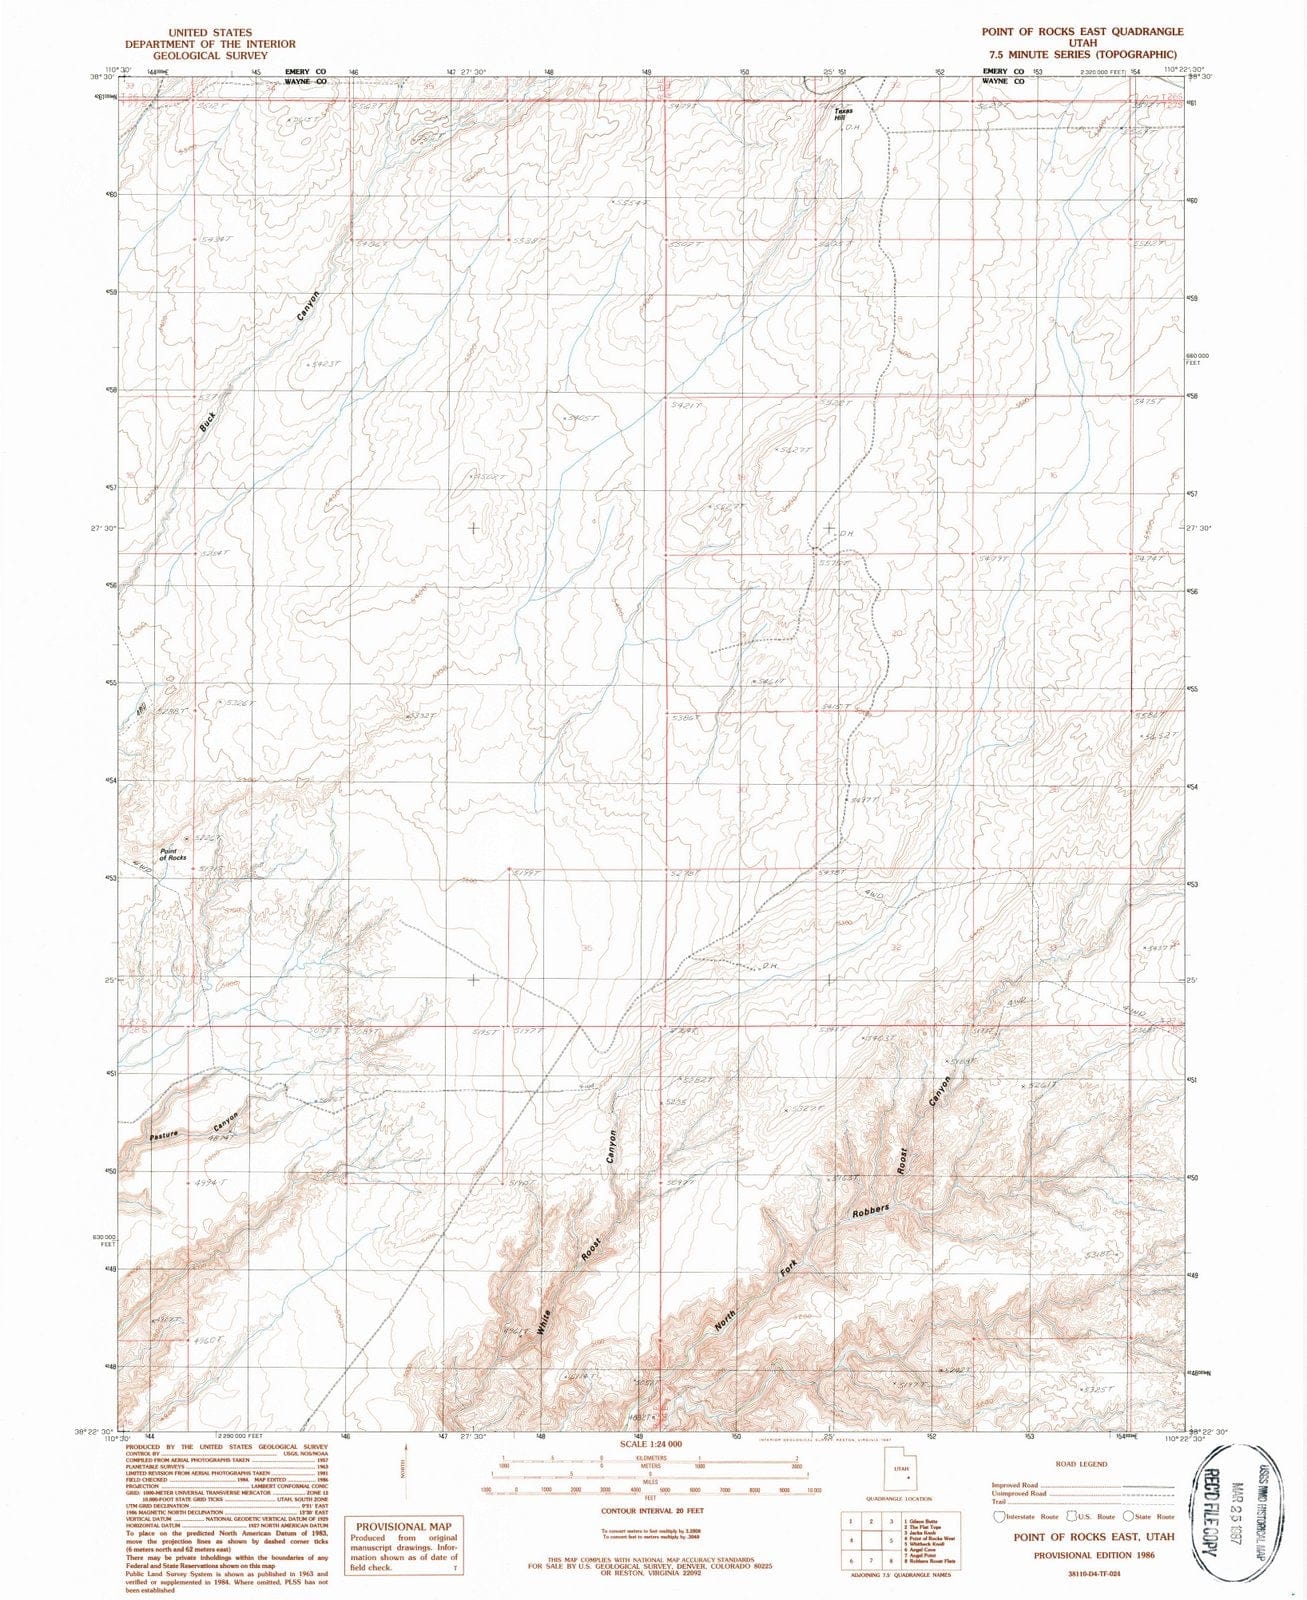 1986 Point of Rocks East, UT - Utah - USGS Topographic Map